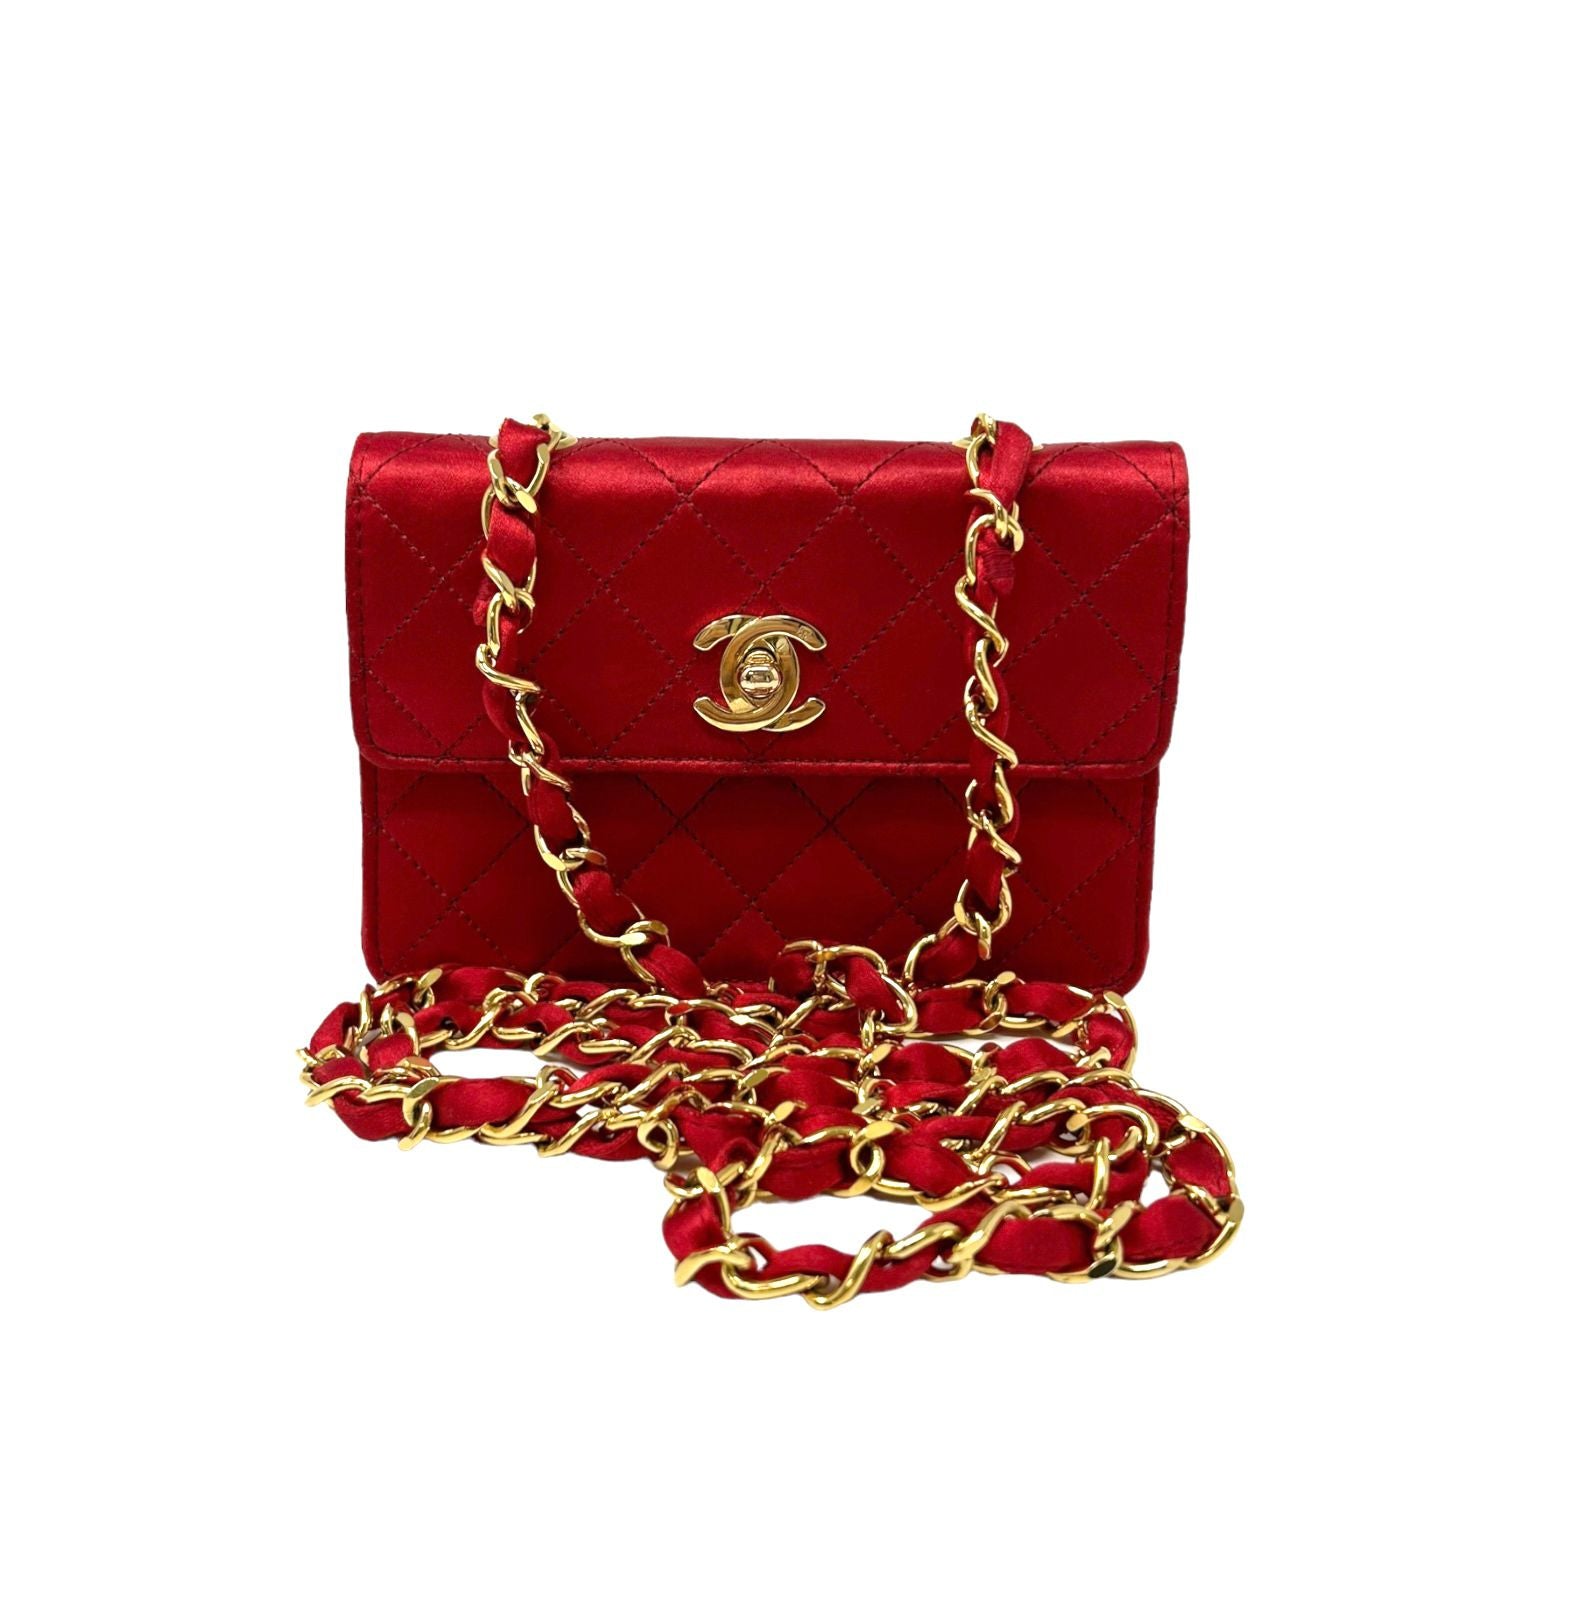 Chanel Red Satin Mini Flap Bag